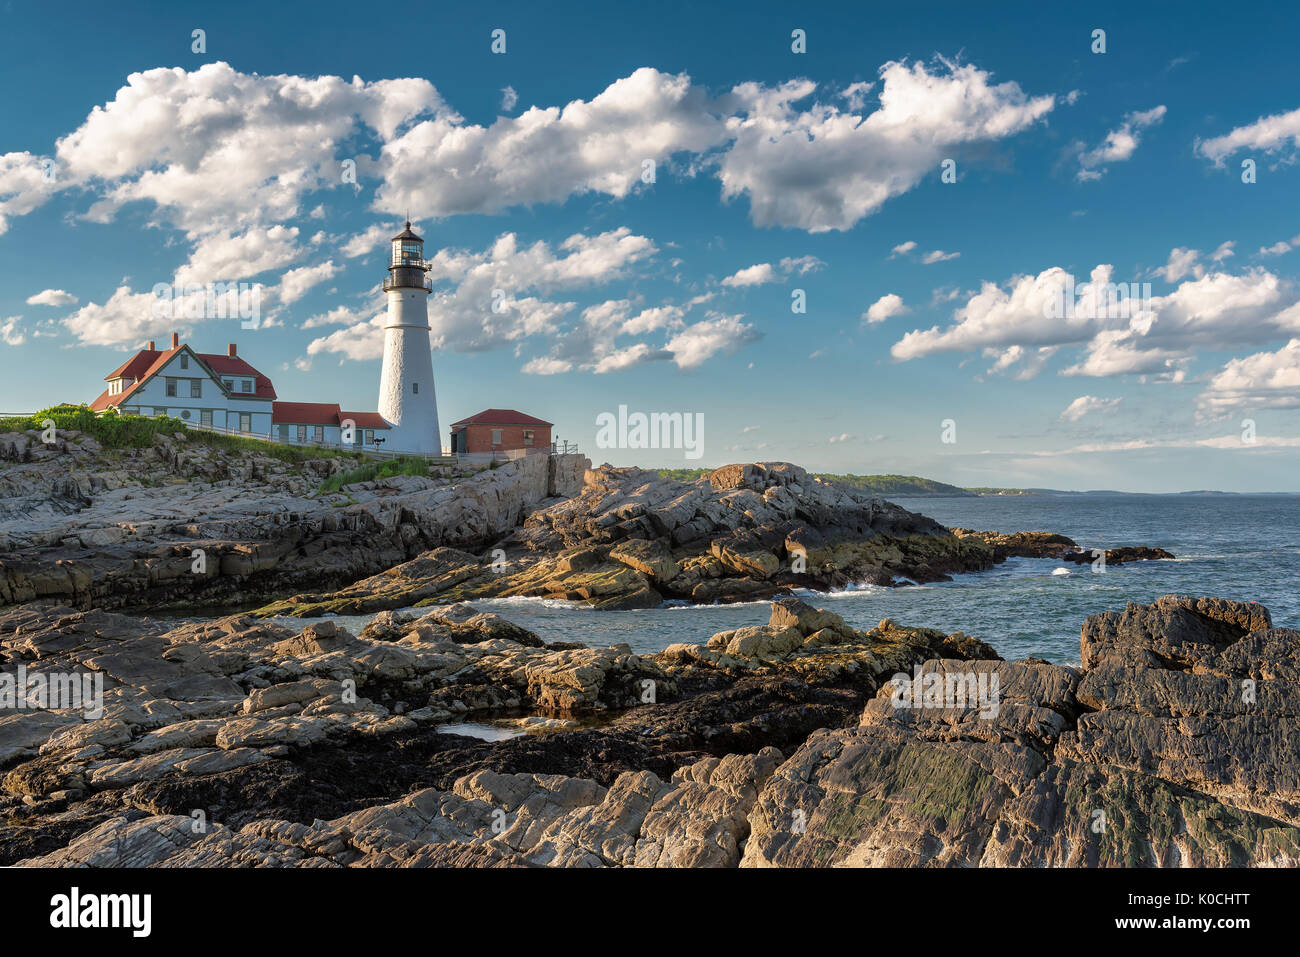 The Portland Head Lighthouse in Cape Elizabeth, Maine, USA Stock Photo